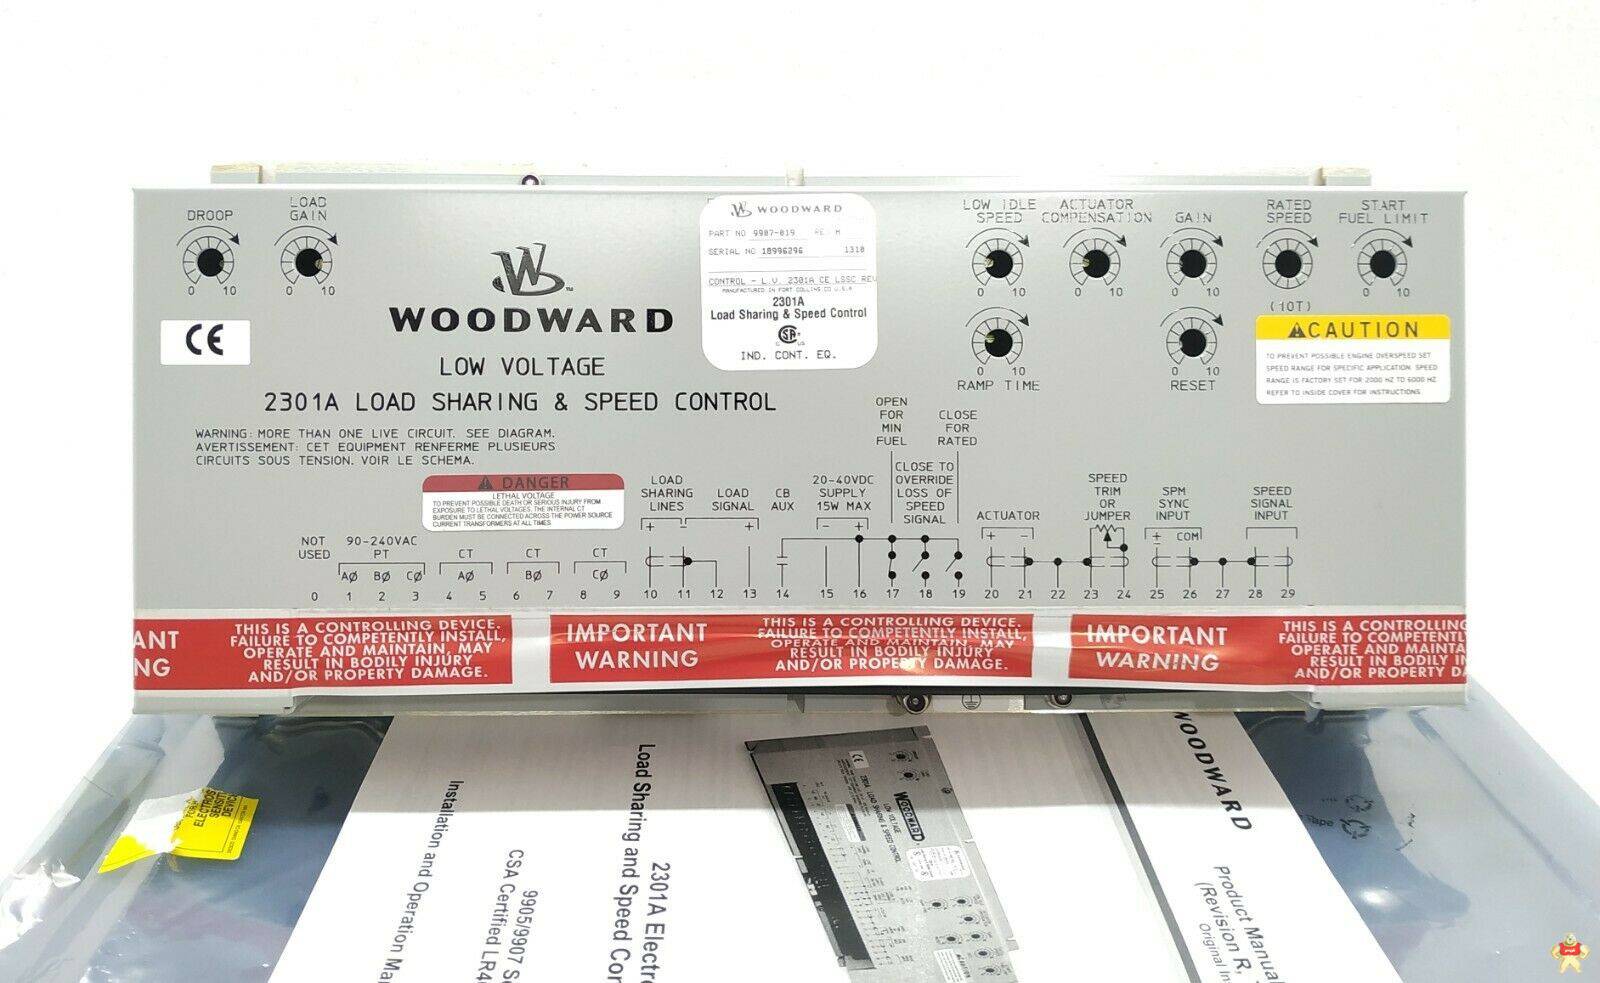 WOODWARD 5463-432伍德沃德船舶备件供应 全新原装,库存现货,质保一年